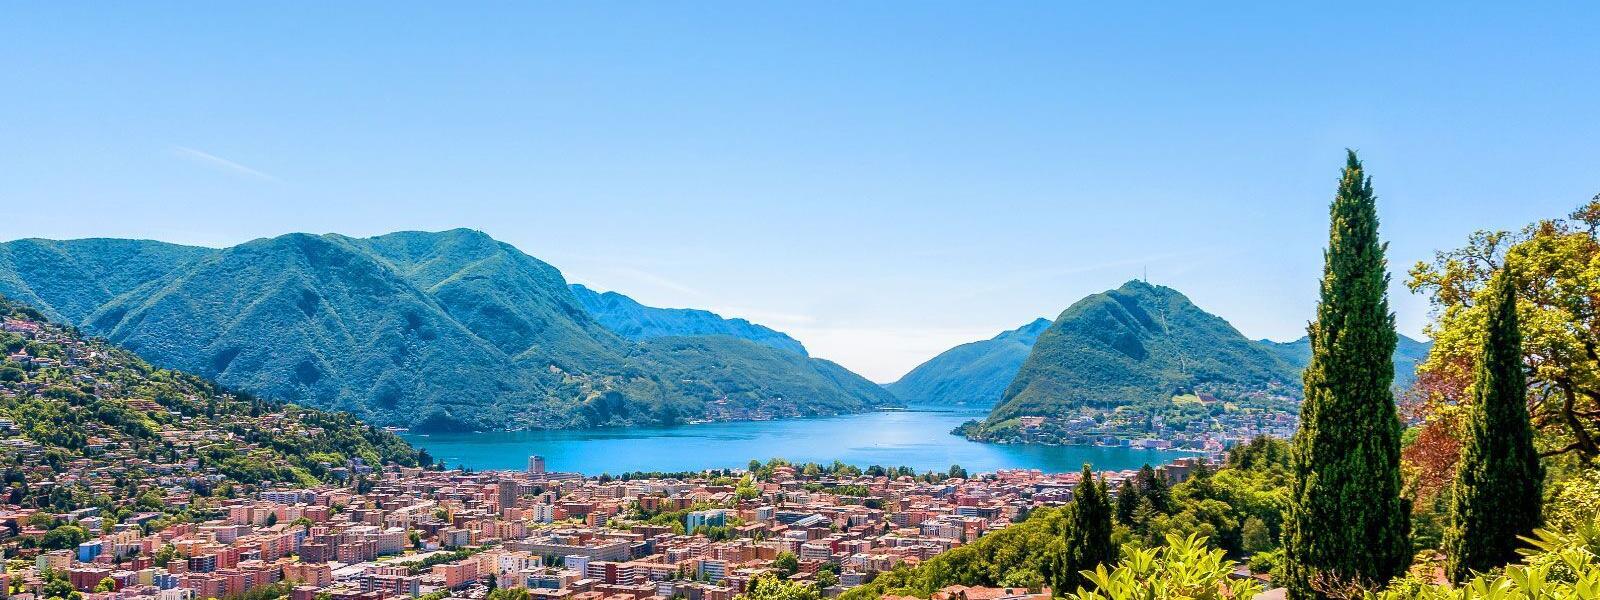 Ferienwohnung und Ferienhaus am Lago di Lugano - e-domizil